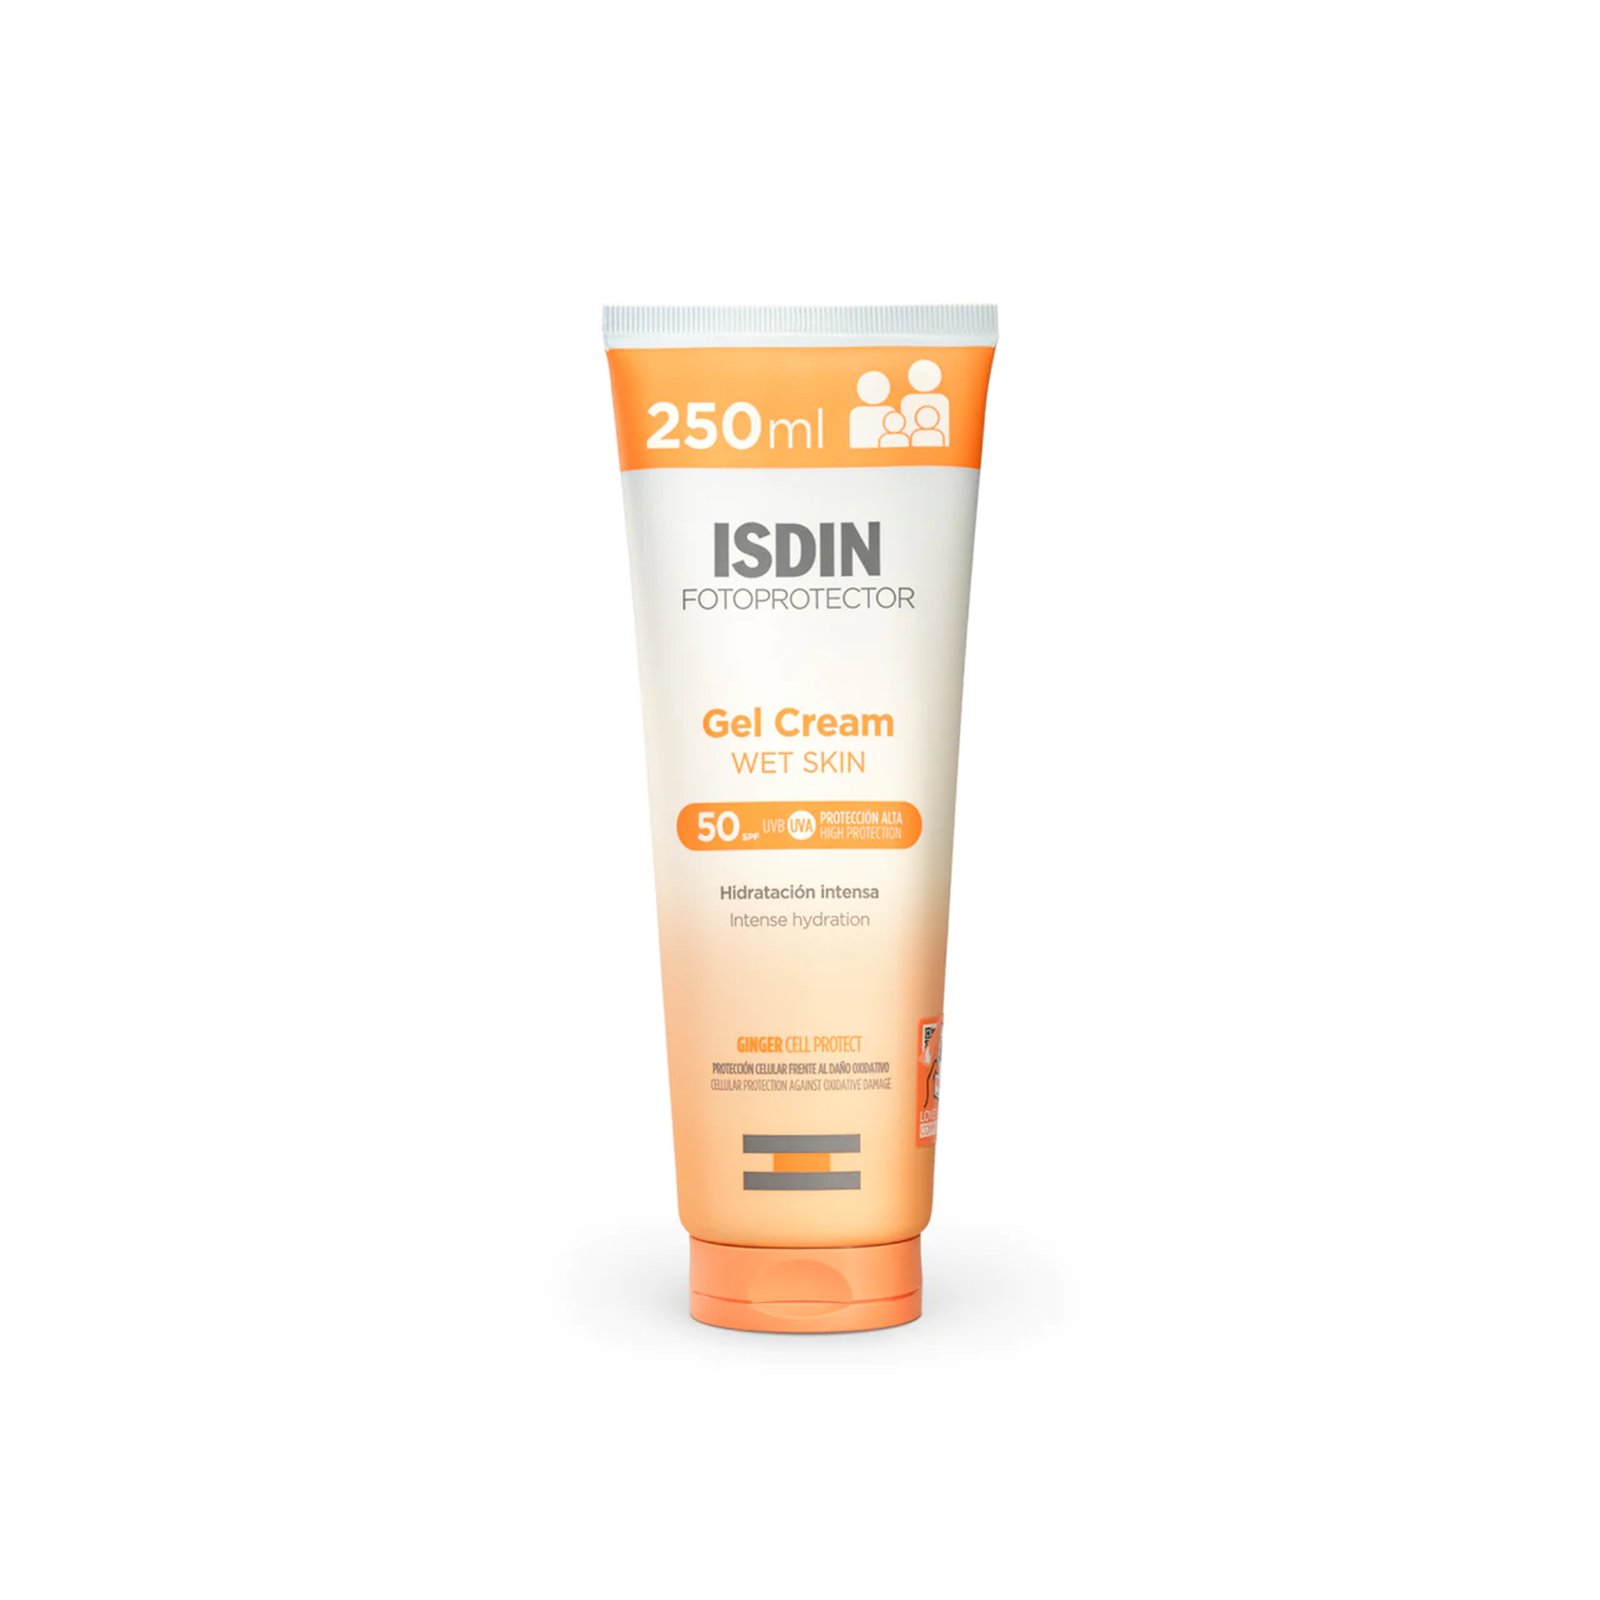 ISDIN Fotoprotector Gel Cream SPF50 250ml